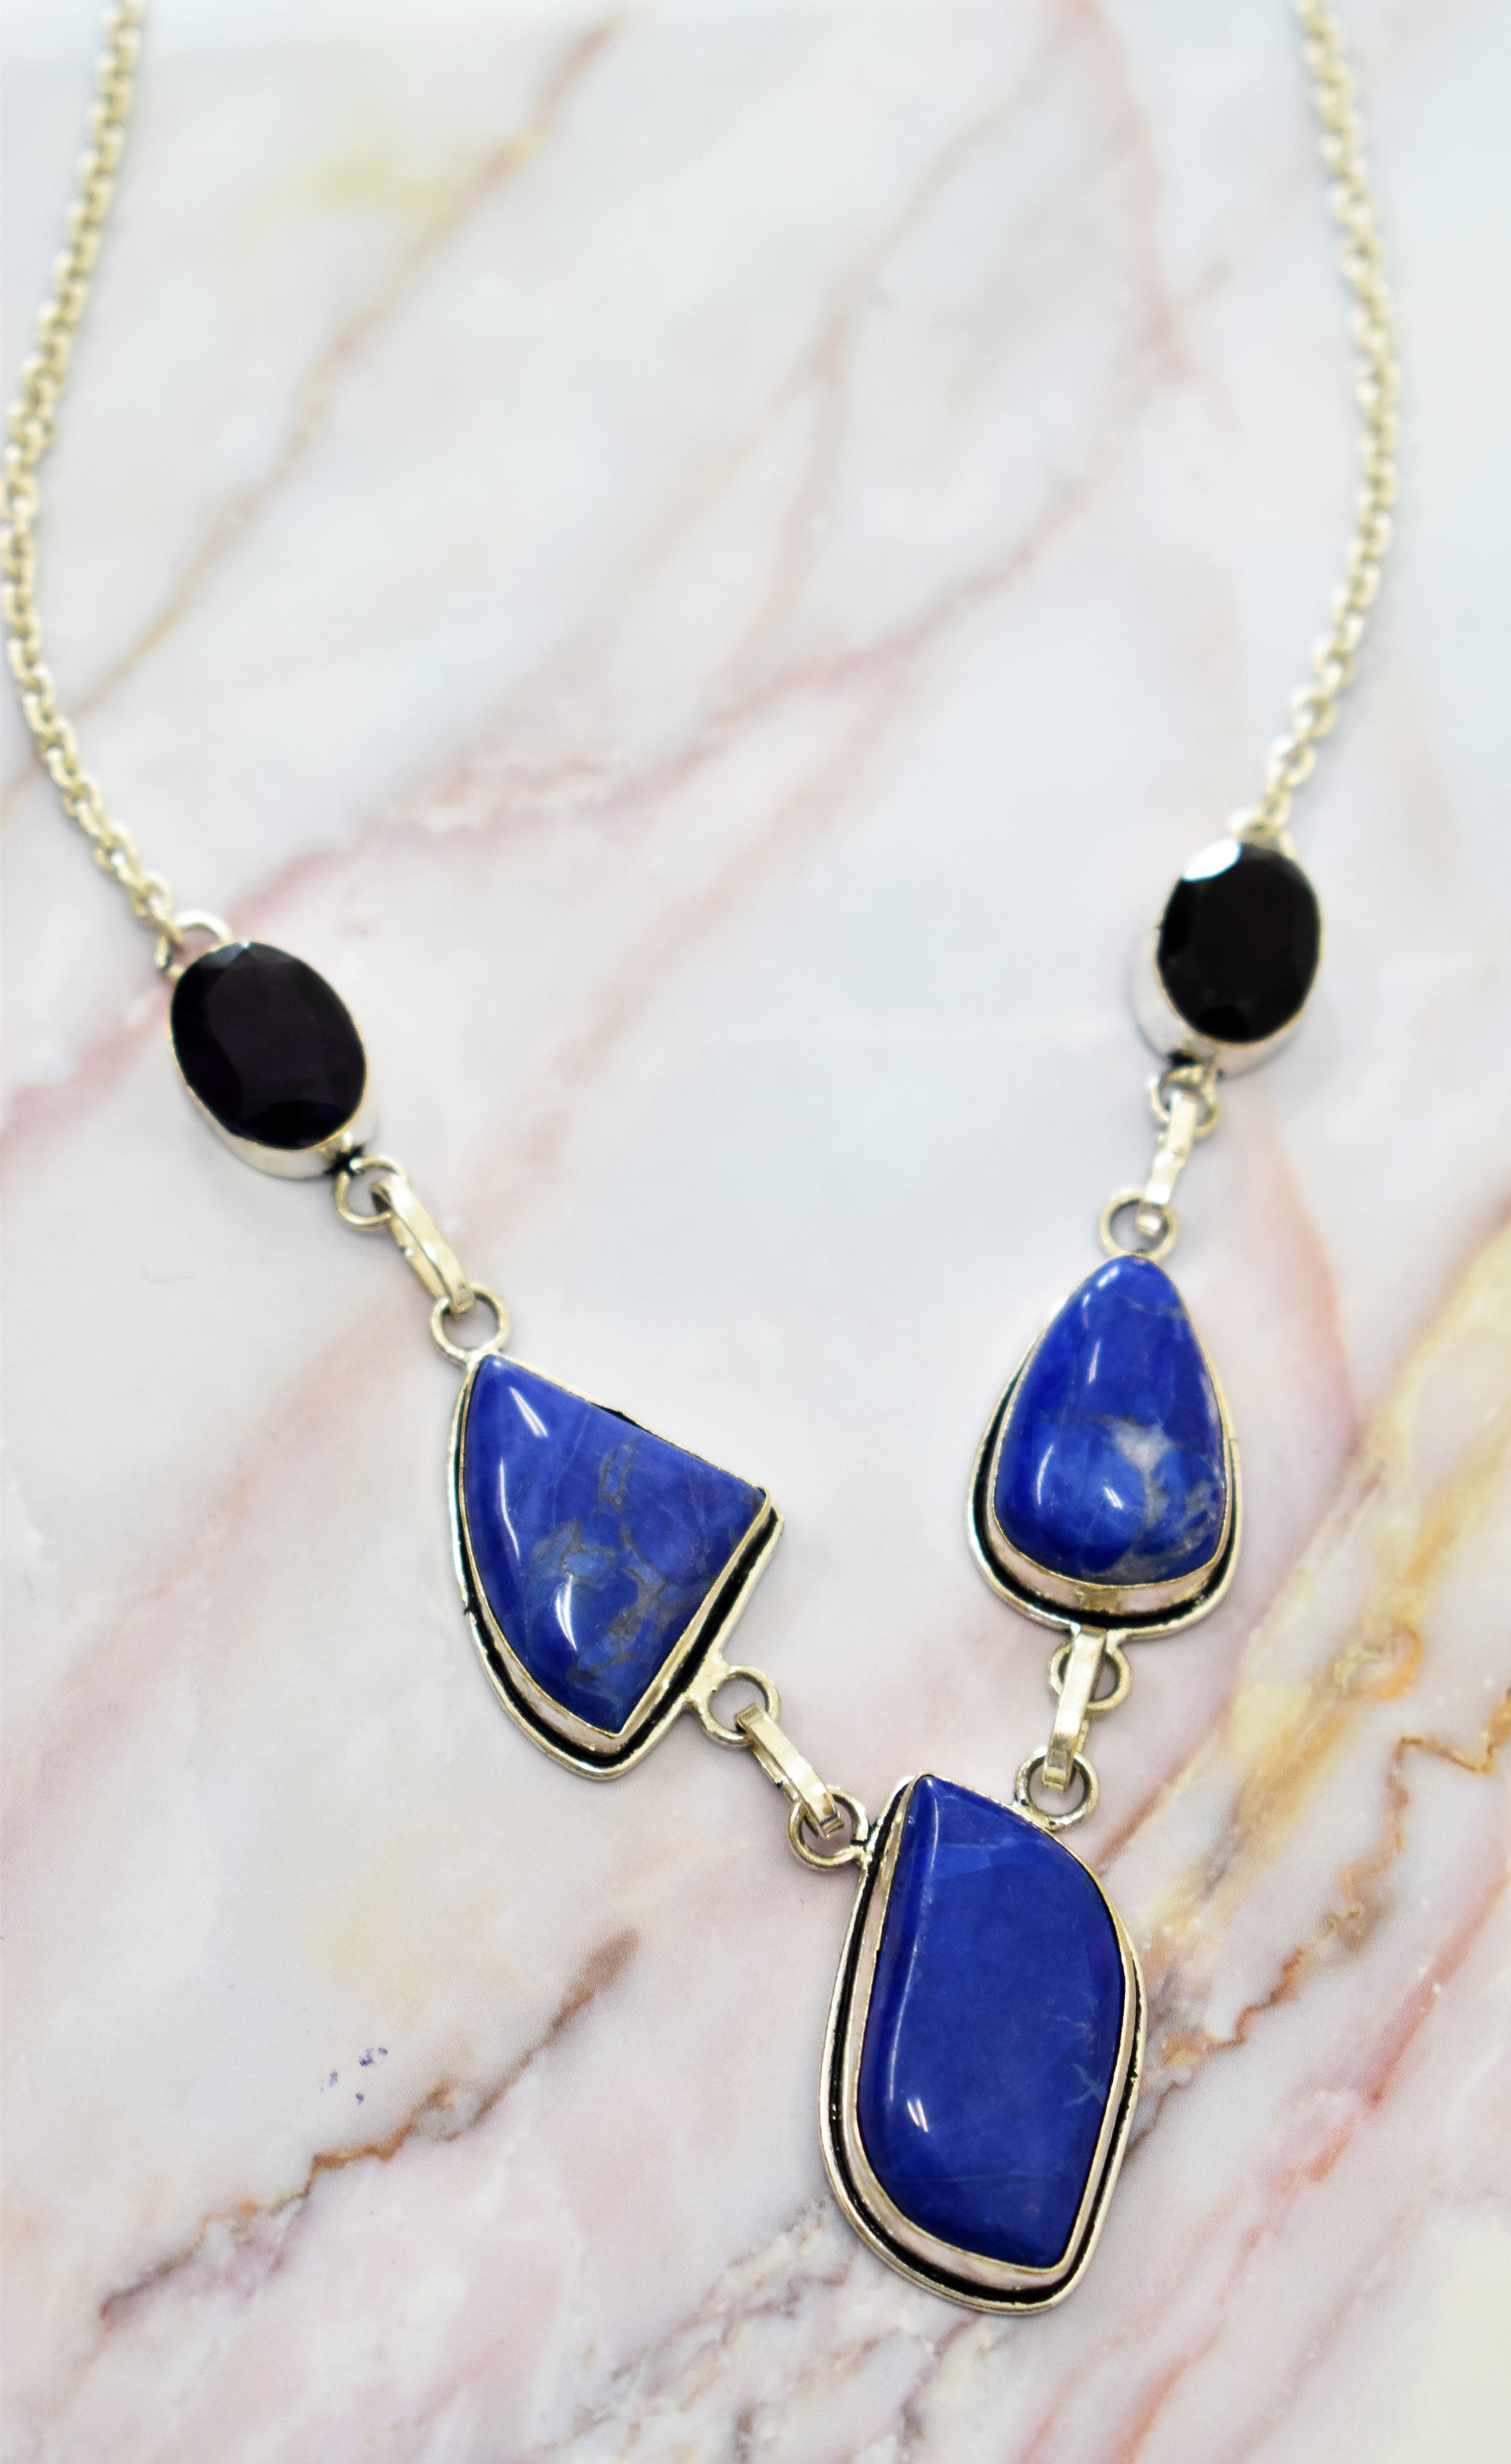 stones-of-transformation - Lapis Lazuli and Amethyst Necklace - Stones of Transformation - 